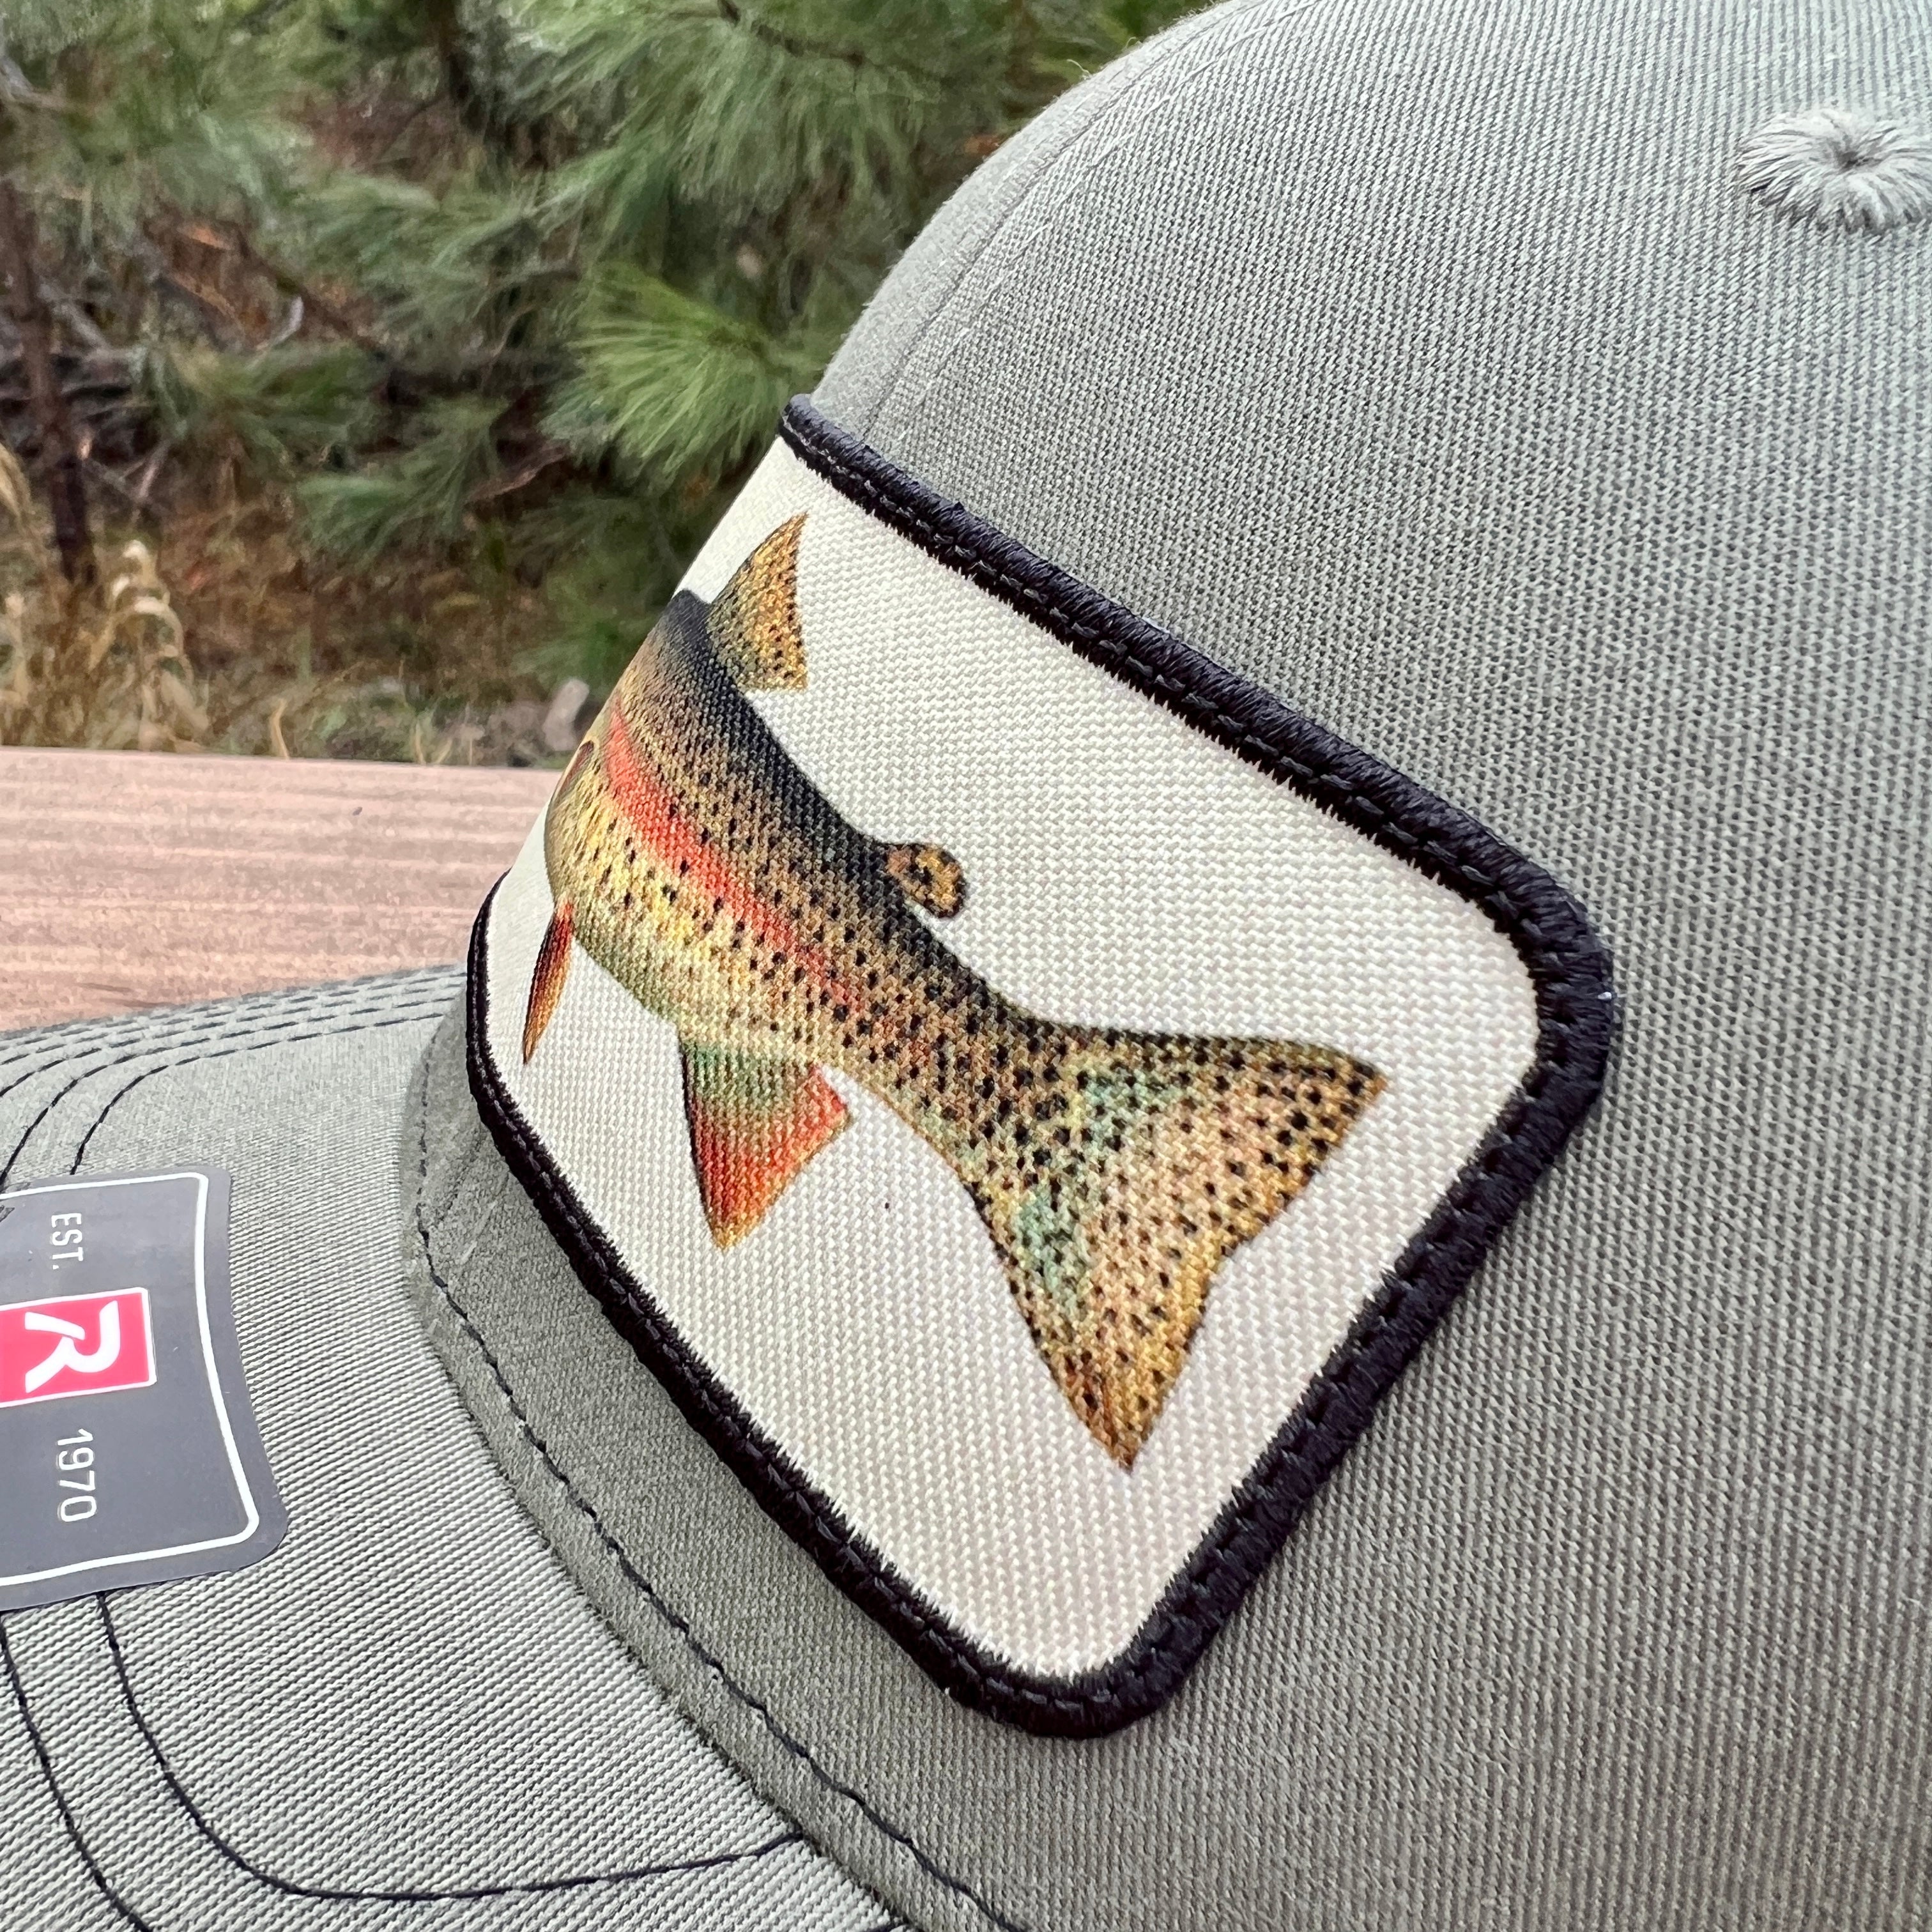 Rainbow Trout Fishing Hat - Richardson Loden Green/Black-Hats-208 Tees Wholesale, Idaho